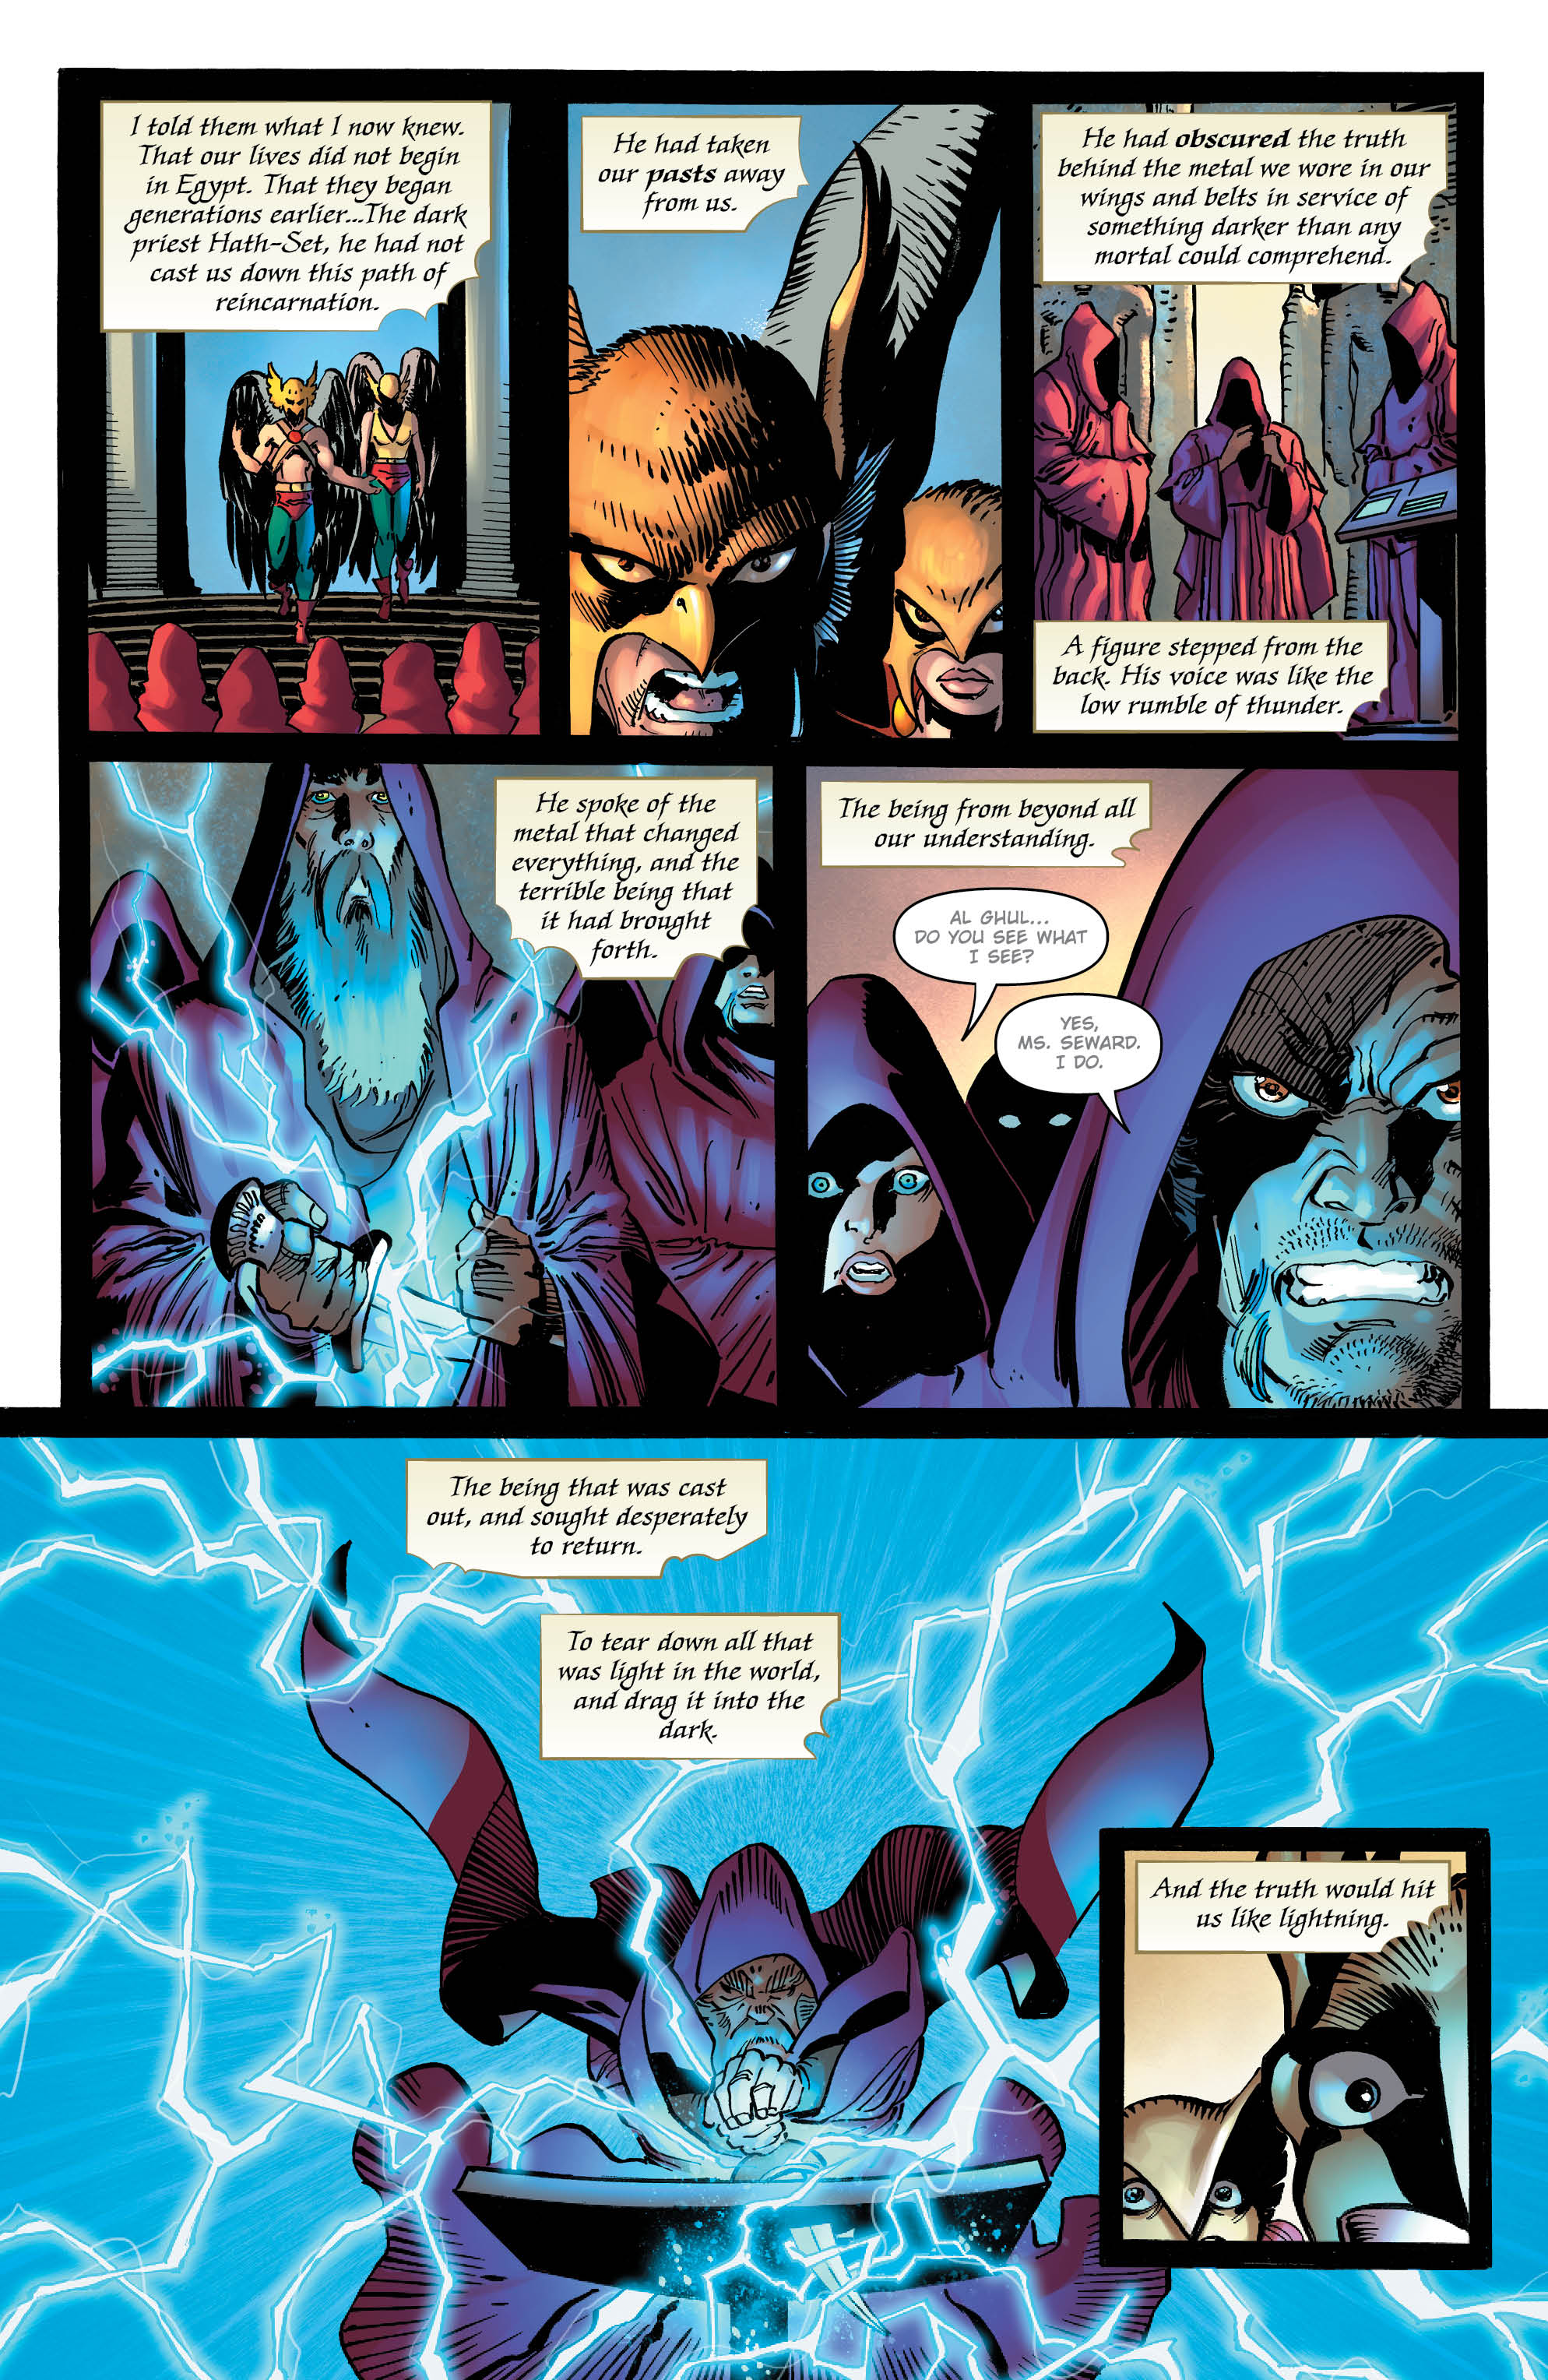 Dark Days The Casting 3 - DC Comics News